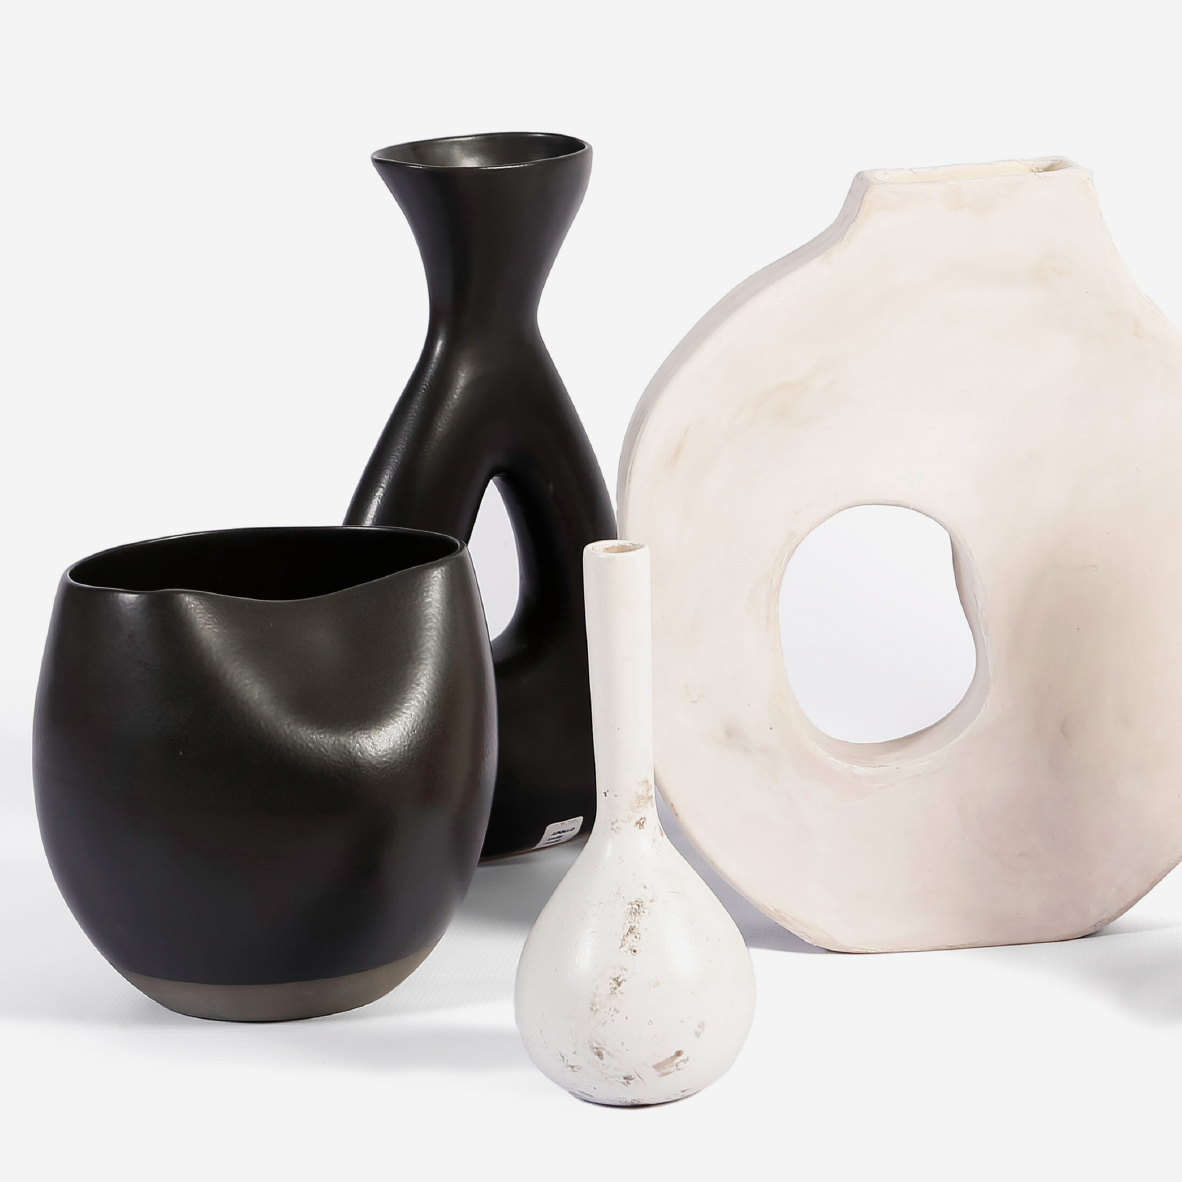 Collapsed Vase - Black